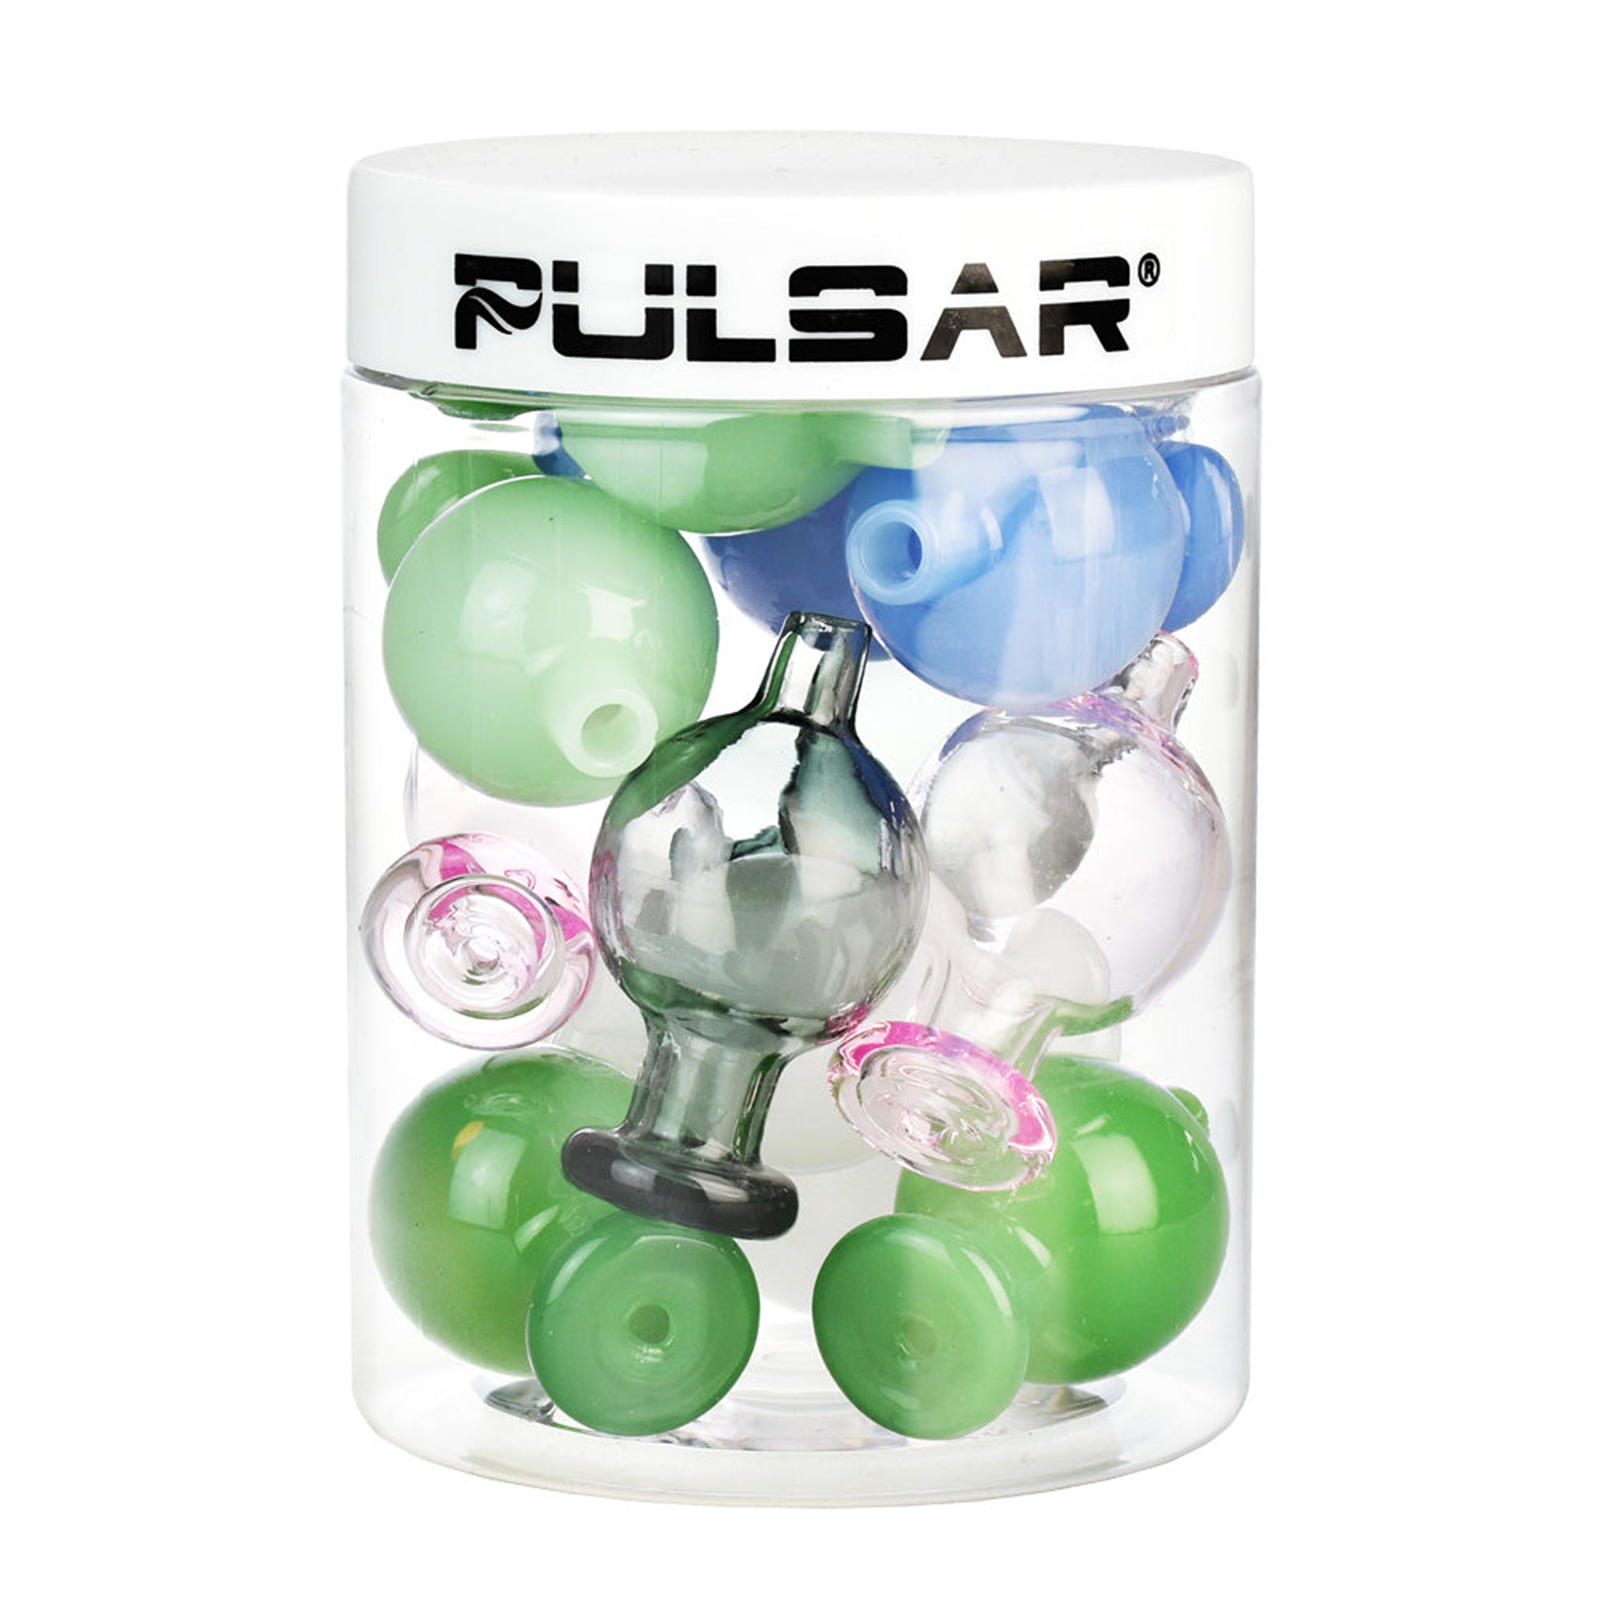  Pulsar Bubble Carb Cap Set 12 pieces- INHALCO